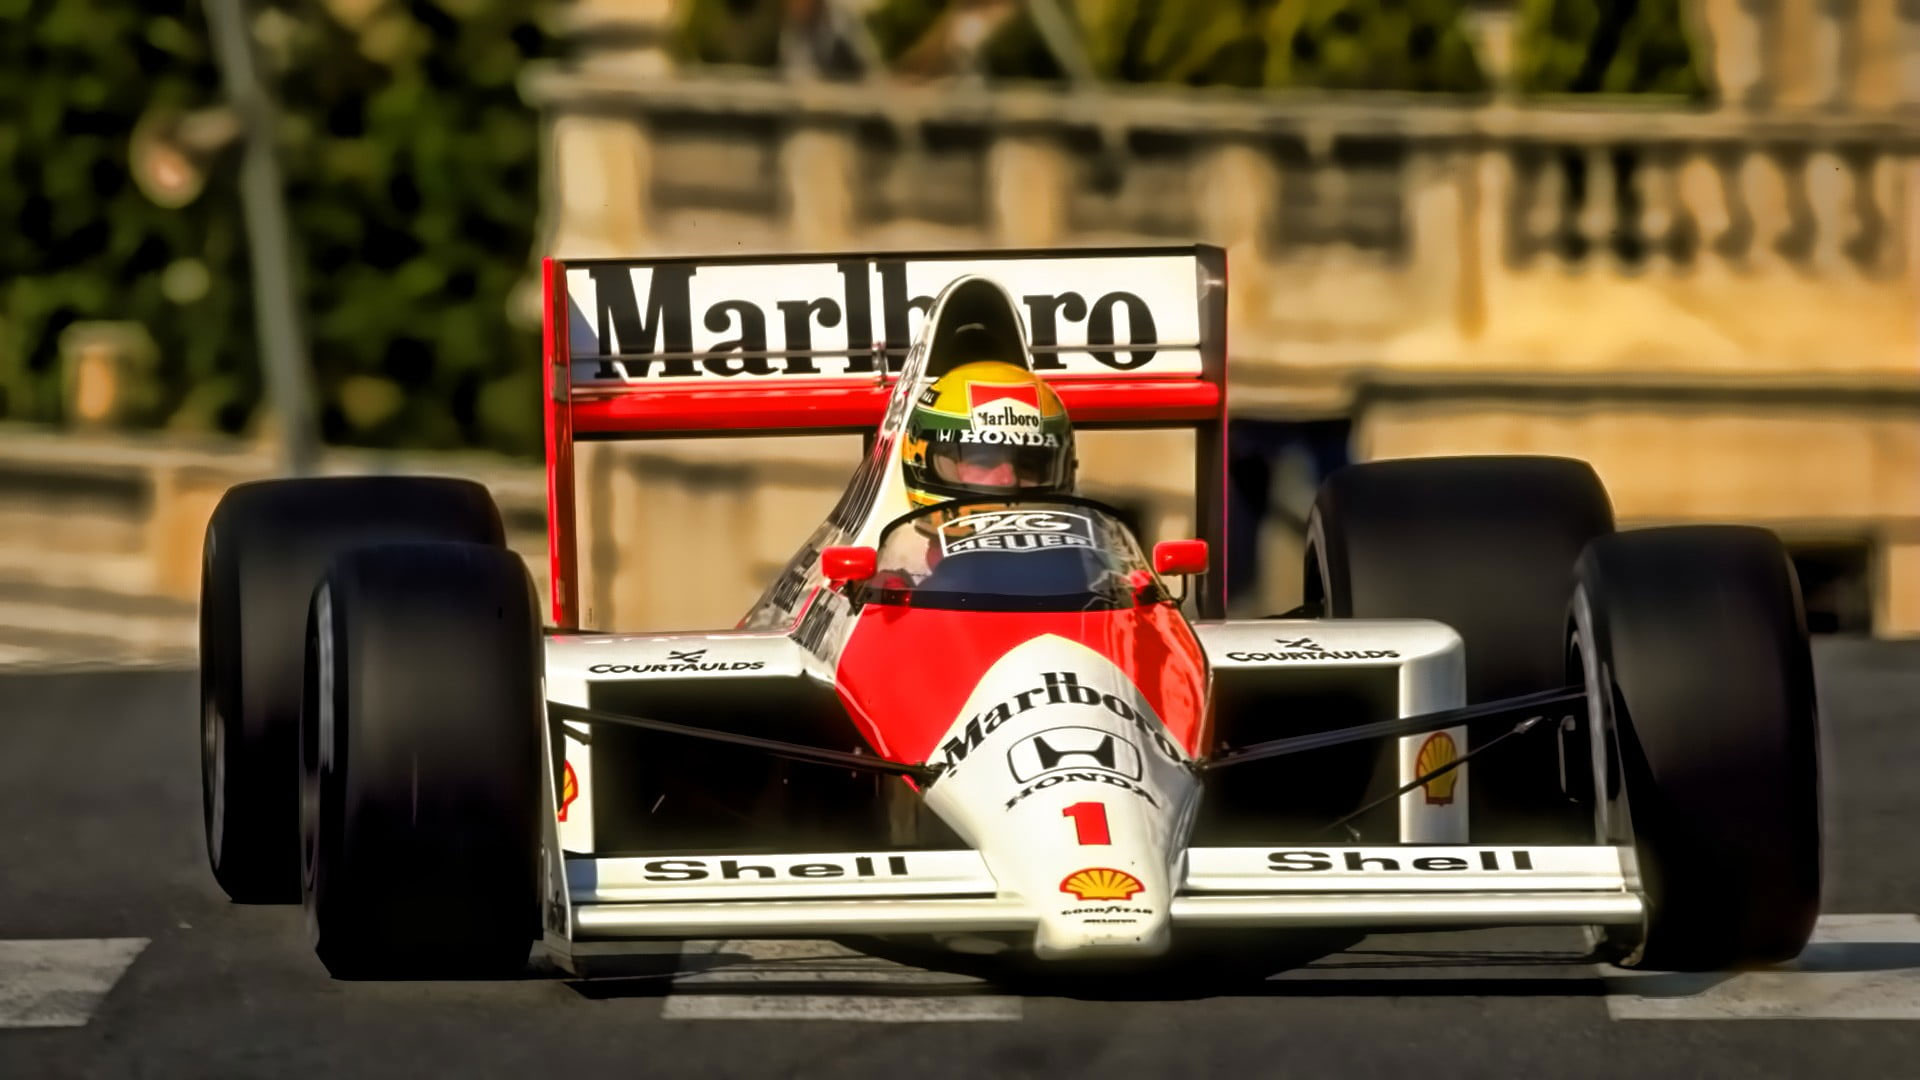 Wallpaper Red And White Marlboro Go Kart, Ayrton Senna